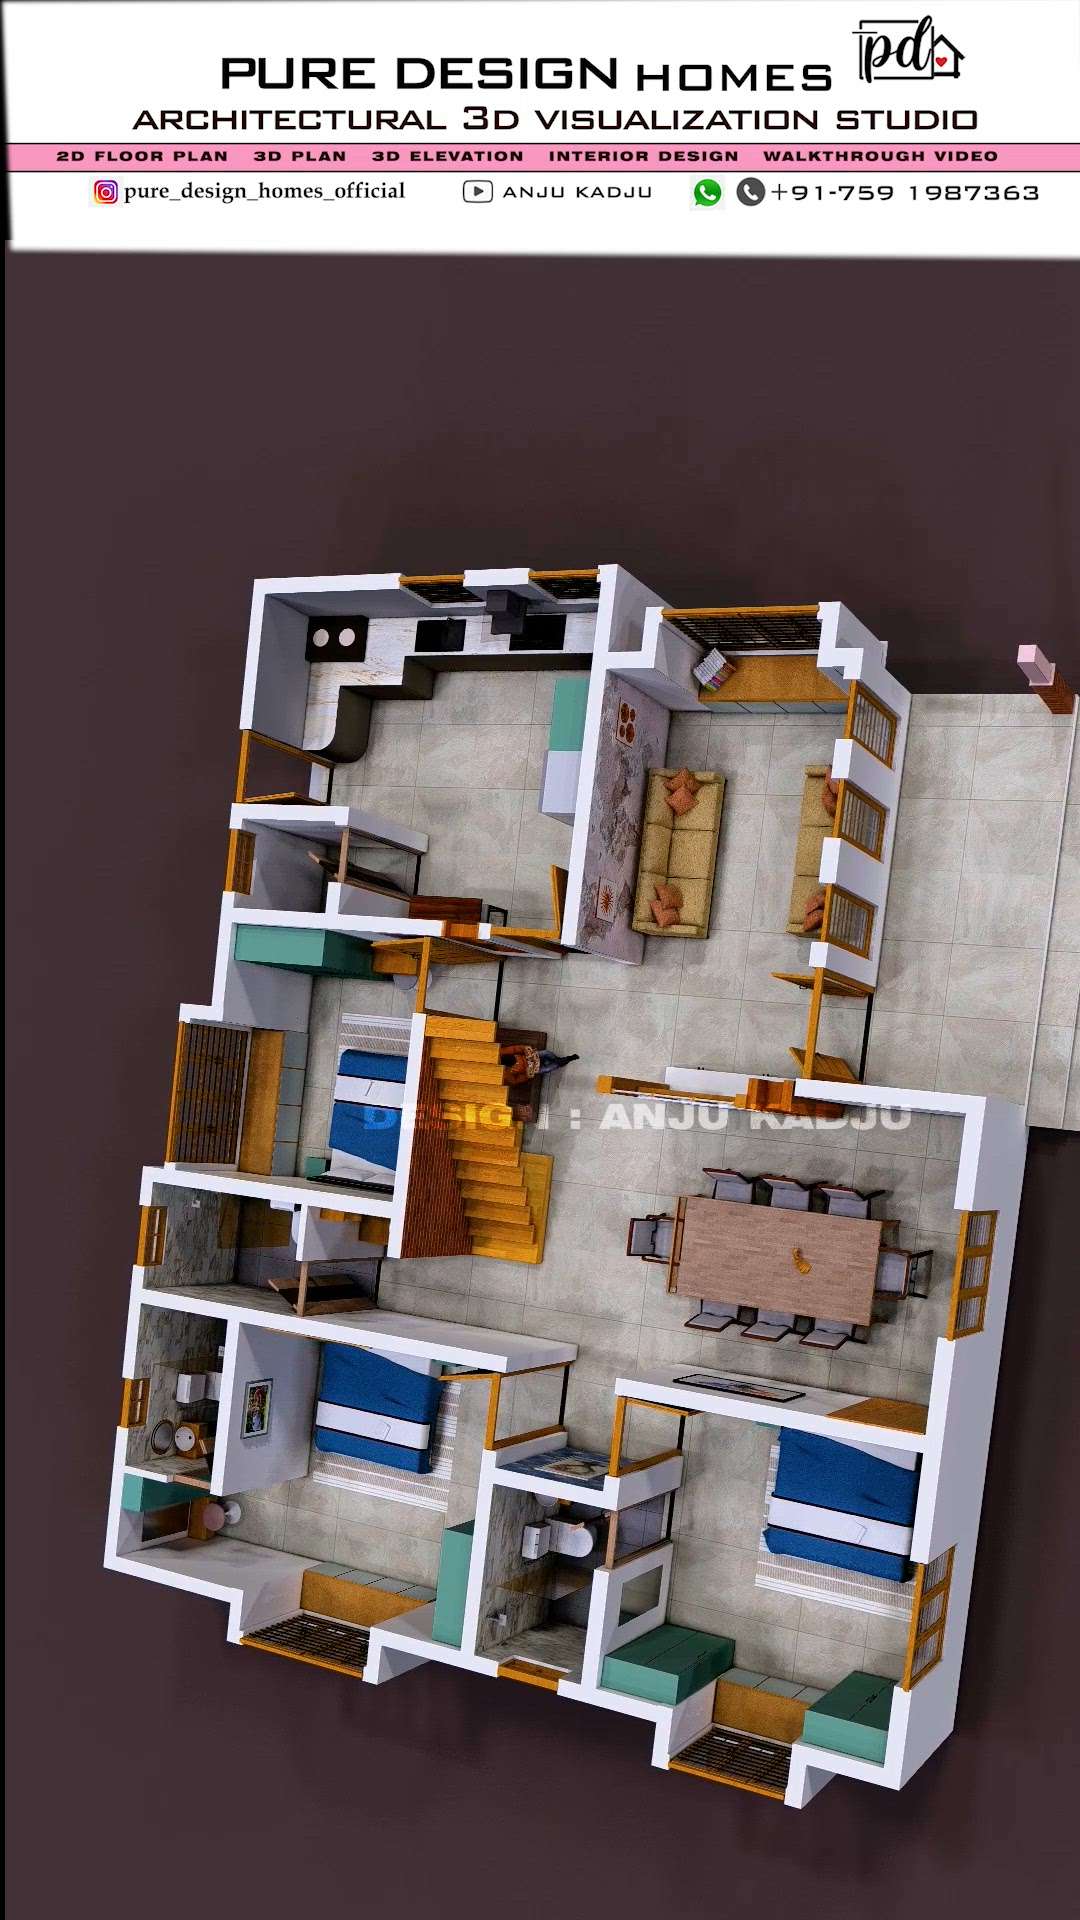 3D floor plan / interior top view /3d plan /3bhk house plan
Interior design in  one view
Designed by anju kadju
+91-7591987363
കൂടുതൽ വിവരങ്ങൾക്കായി ഈ numberil വാട്സ്ആപ്പ് ചെയ്യുക 🙏🏻
#reels
#3dfloorplan #3dplan #2bhk #plan #interiordesign #interiordesigner #interiortopview #instagram #online #3ddesigner